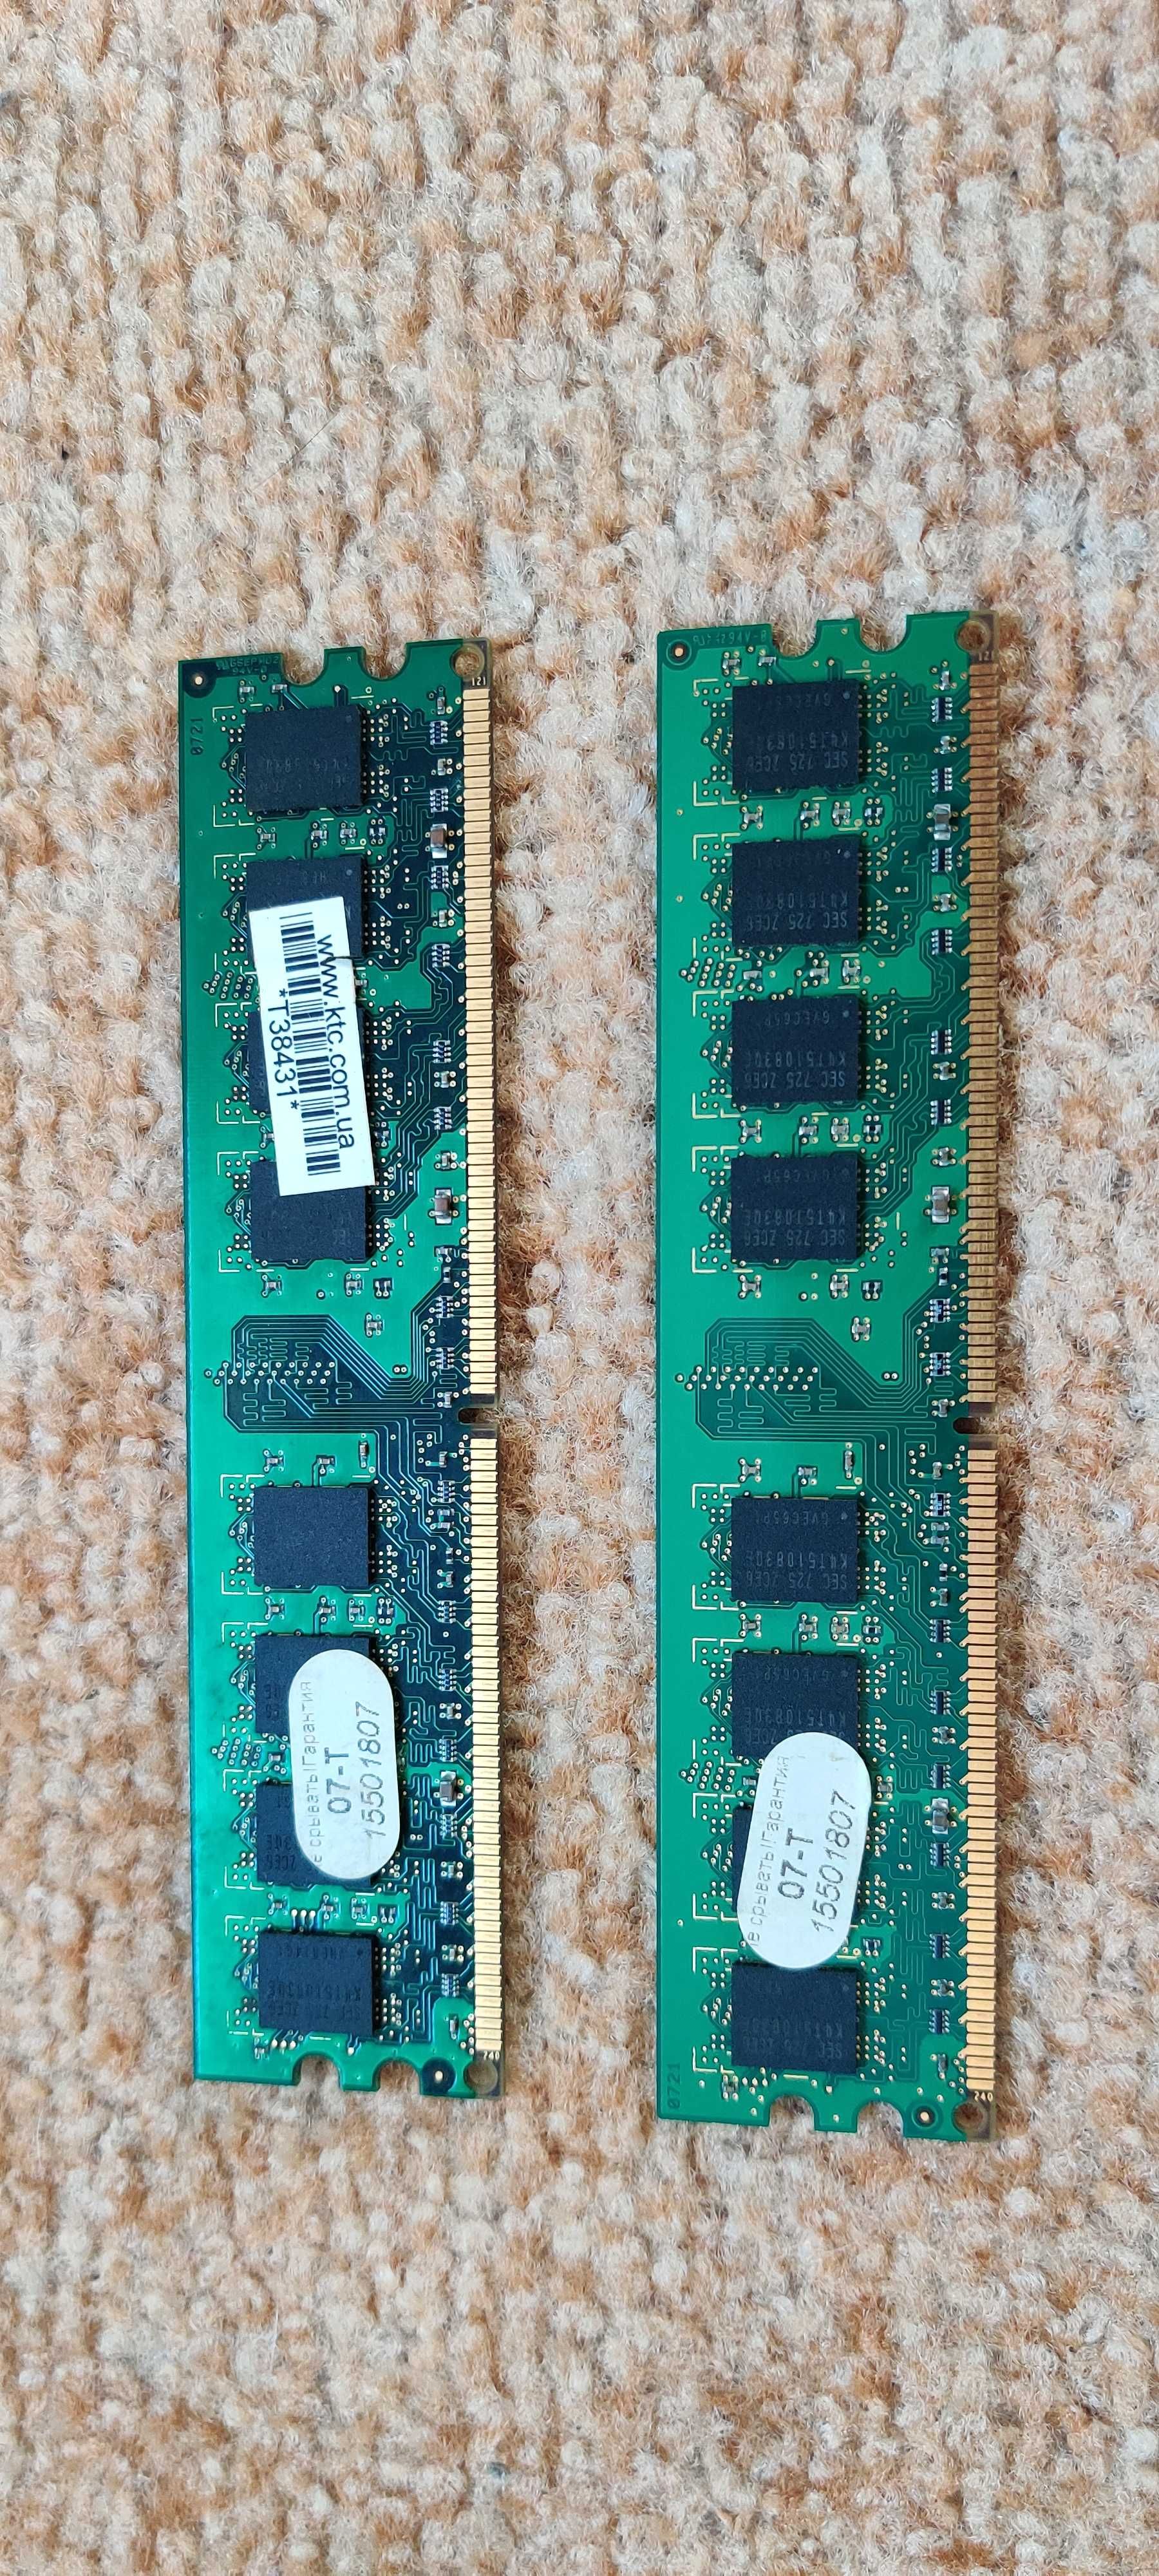 Оперативна пам'ять Samsung 1Gb DDR2 667MHz (m378t2953cz3-ce6)